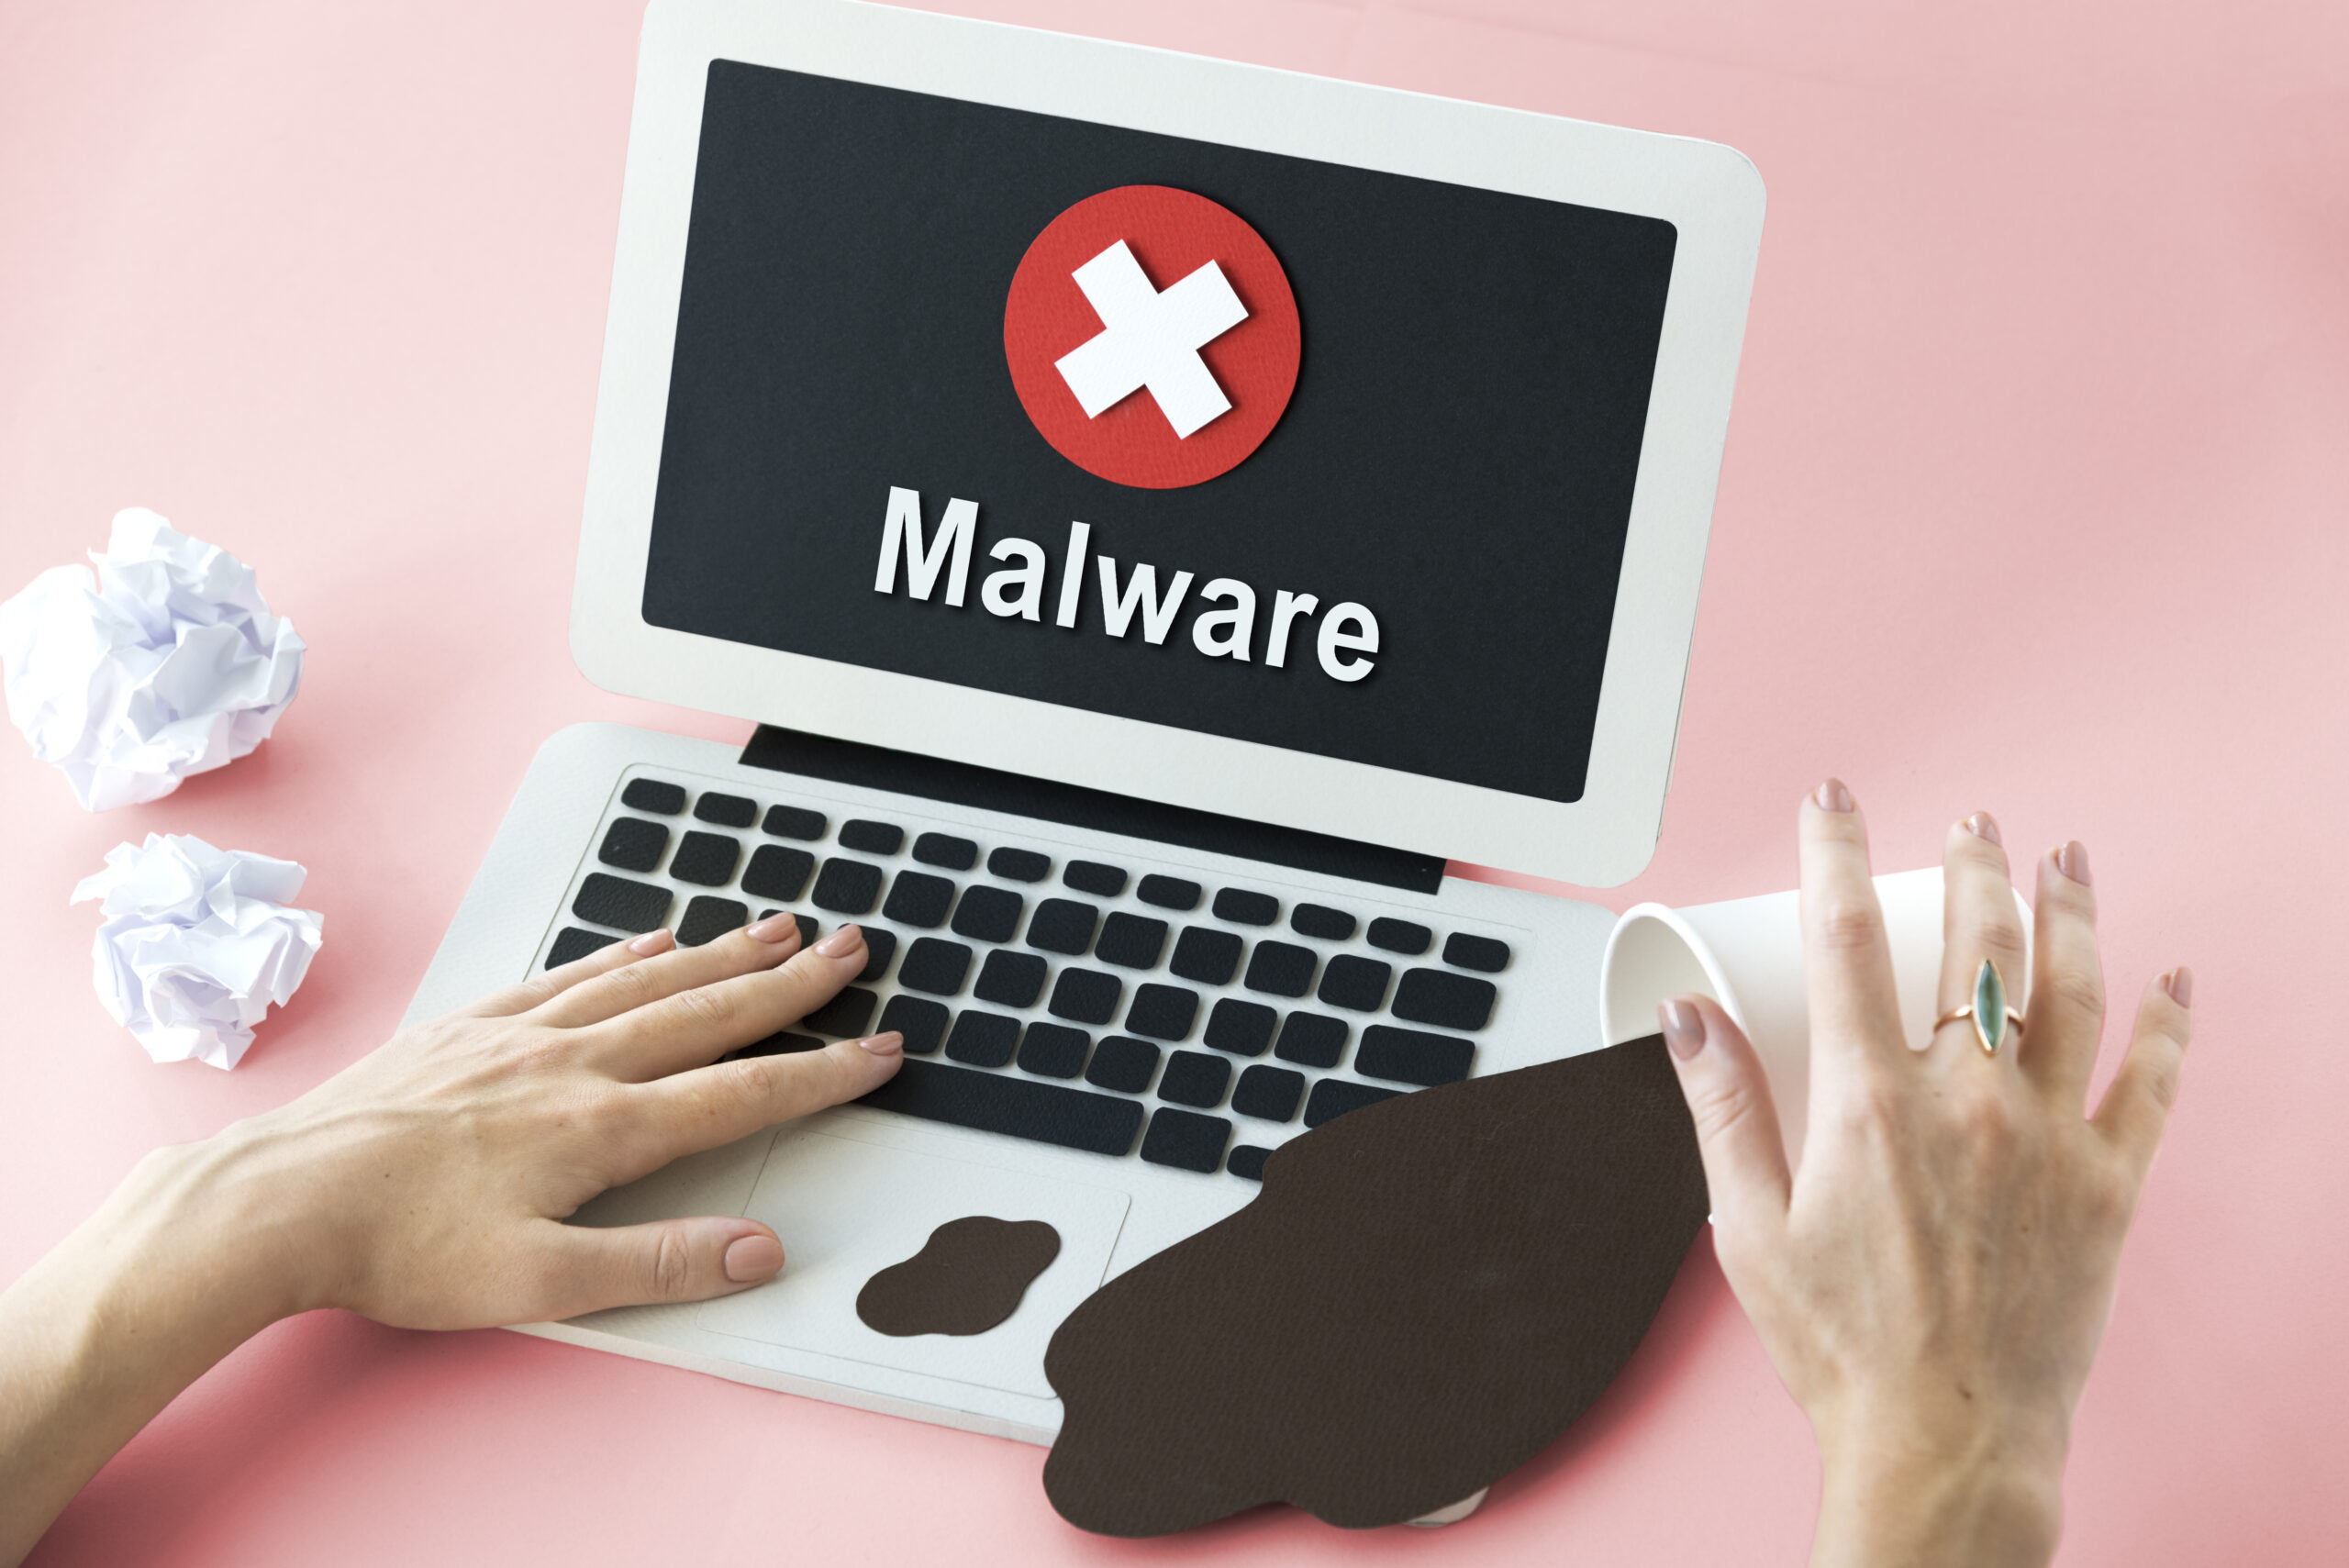 malware affecting PC performance